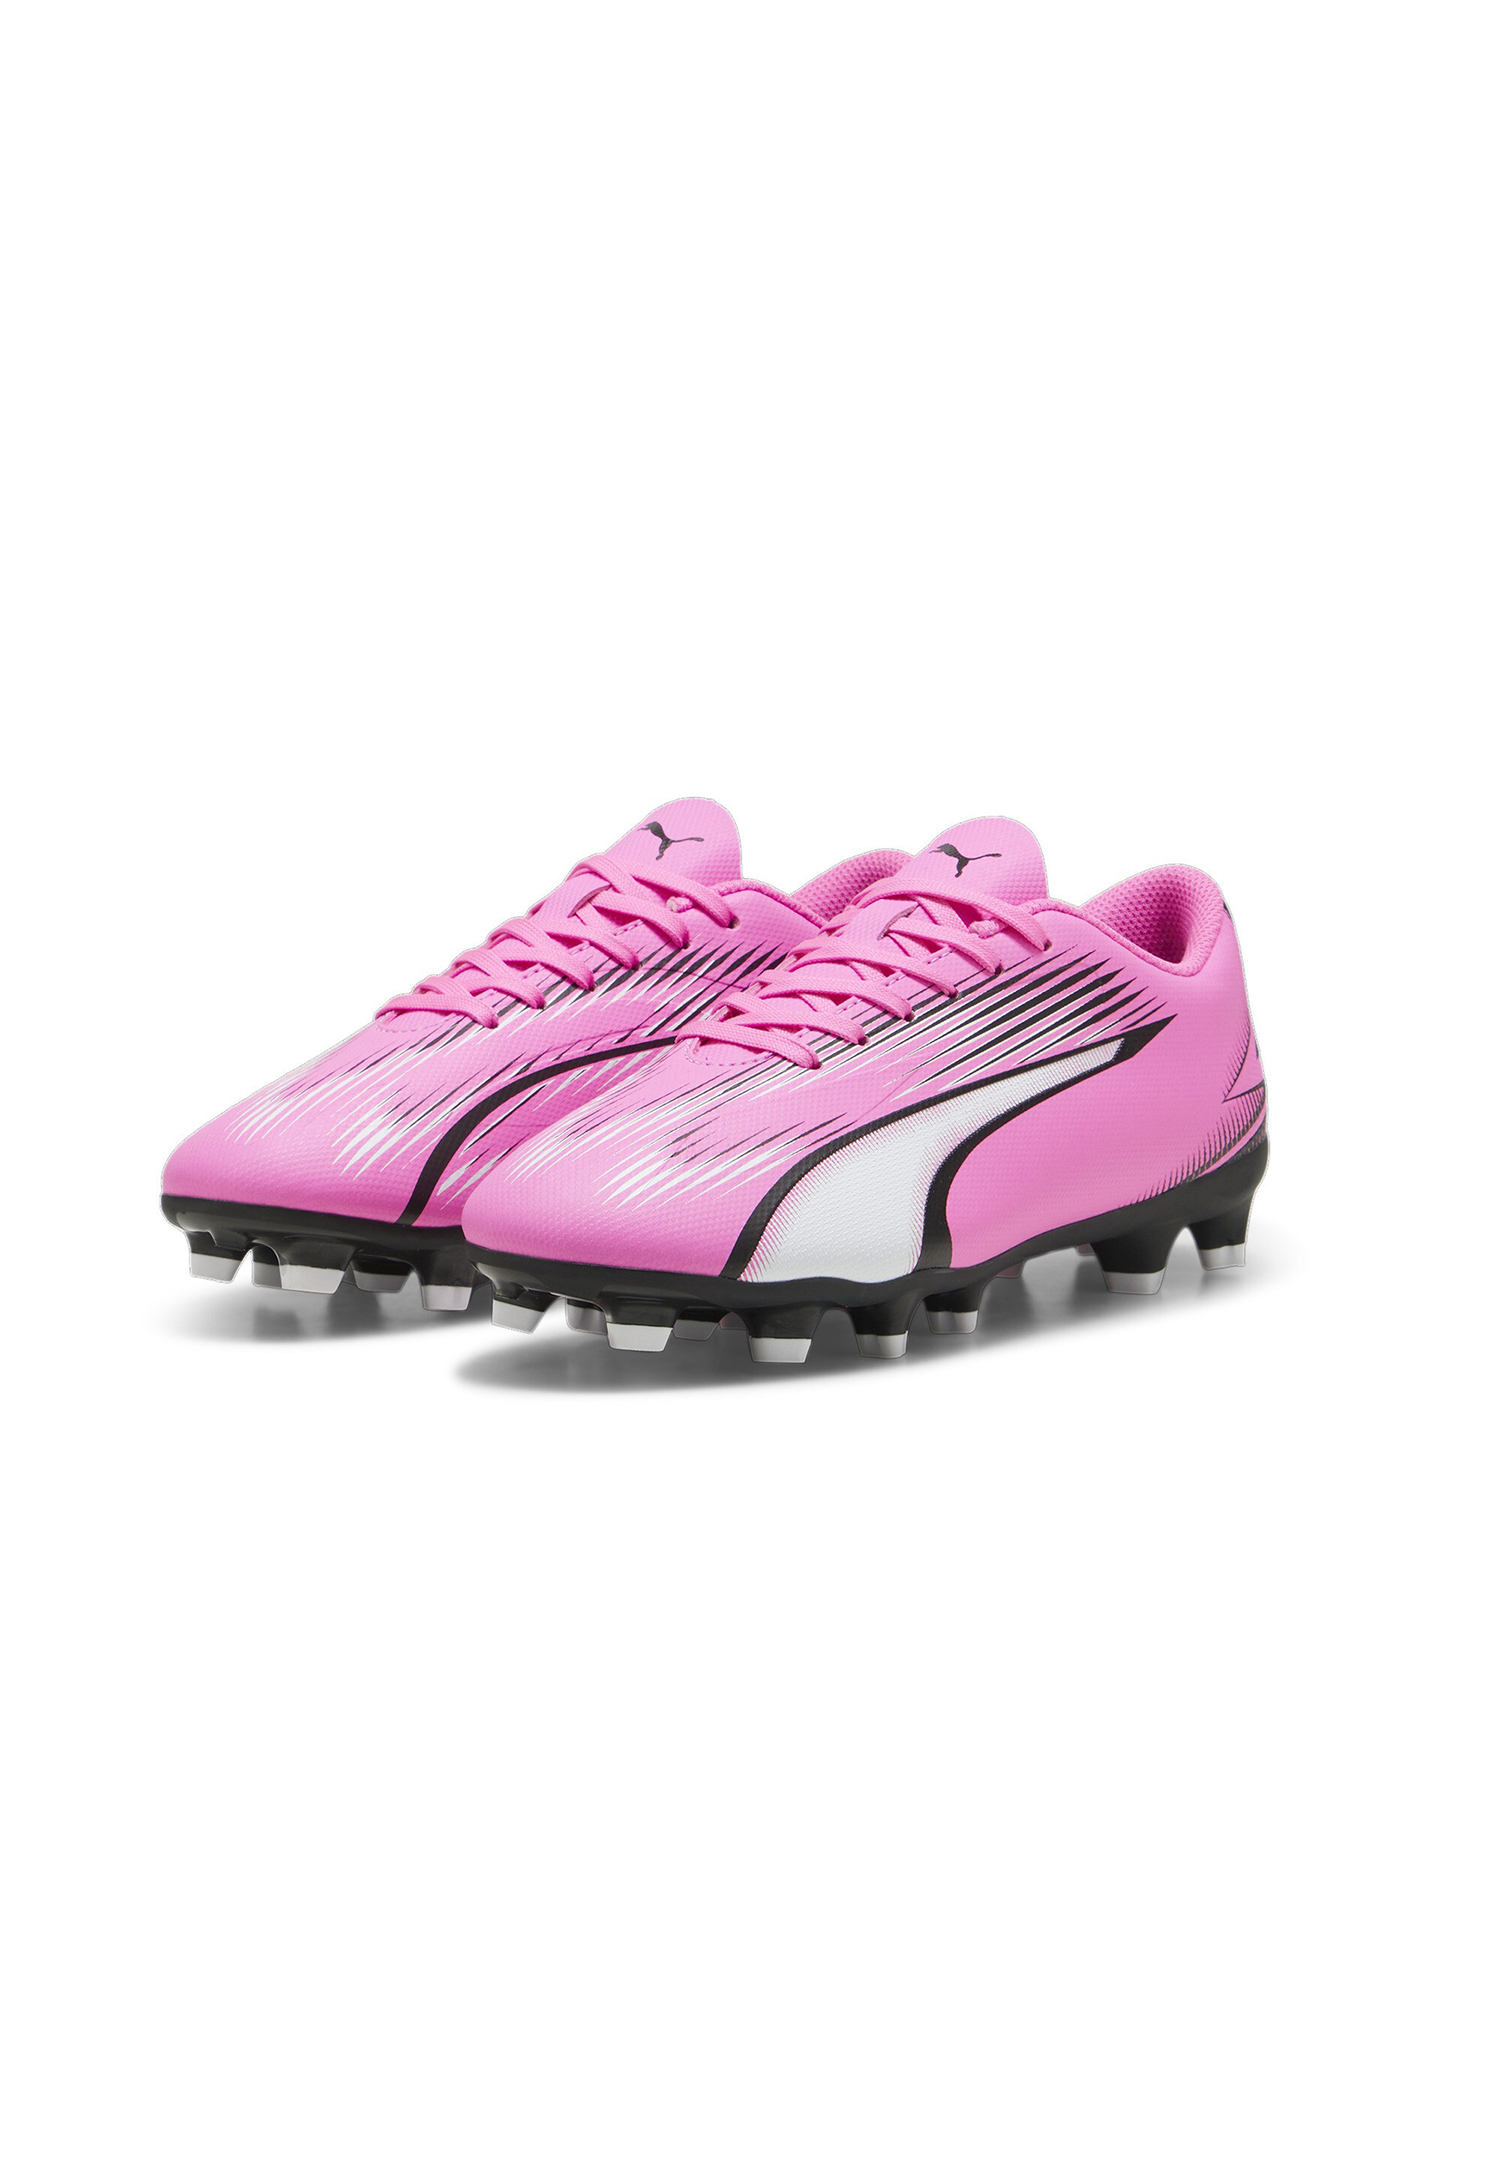 Puma Fußballschuhe ULTRA PLAY FG/AG JR Teenager Kinder Mädchen 107775 01 pink 